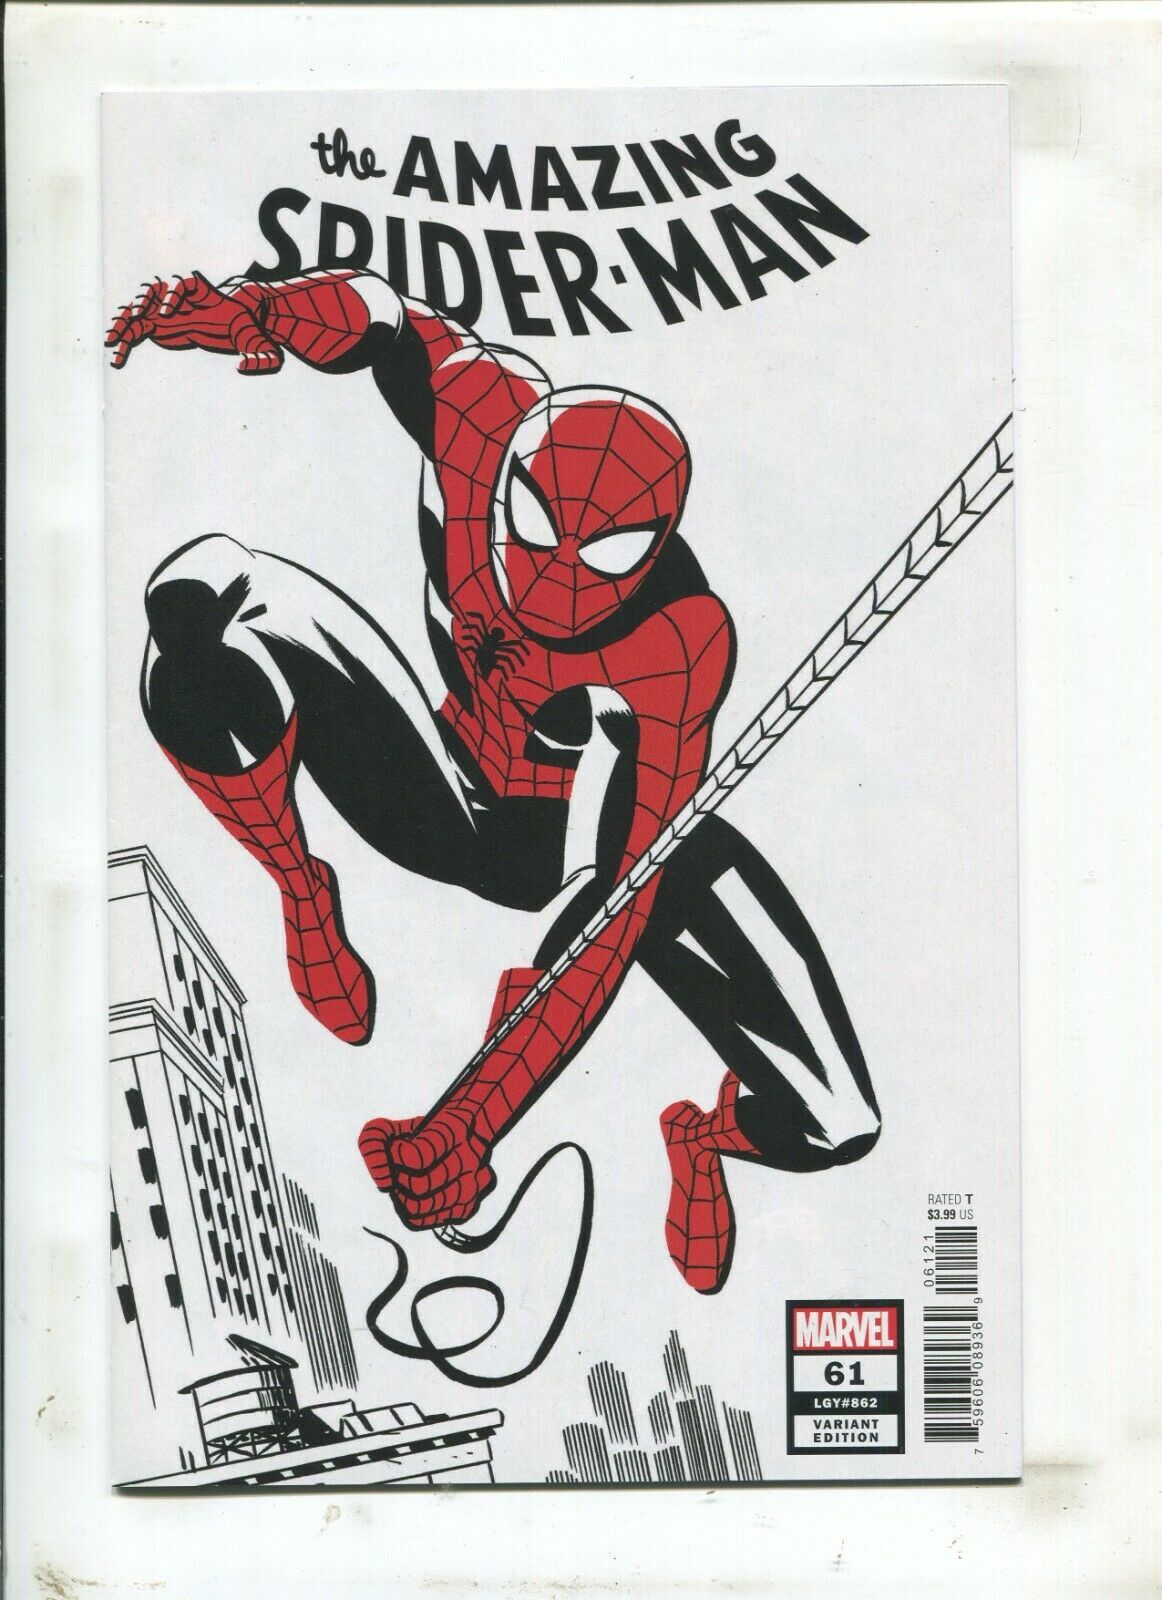 The Amazing Spider-Man #61 LGY #862 - Michael Cho Variant () 2021 |  Comic Books - Modern Age, Marvel, Spider-Man / HipComic